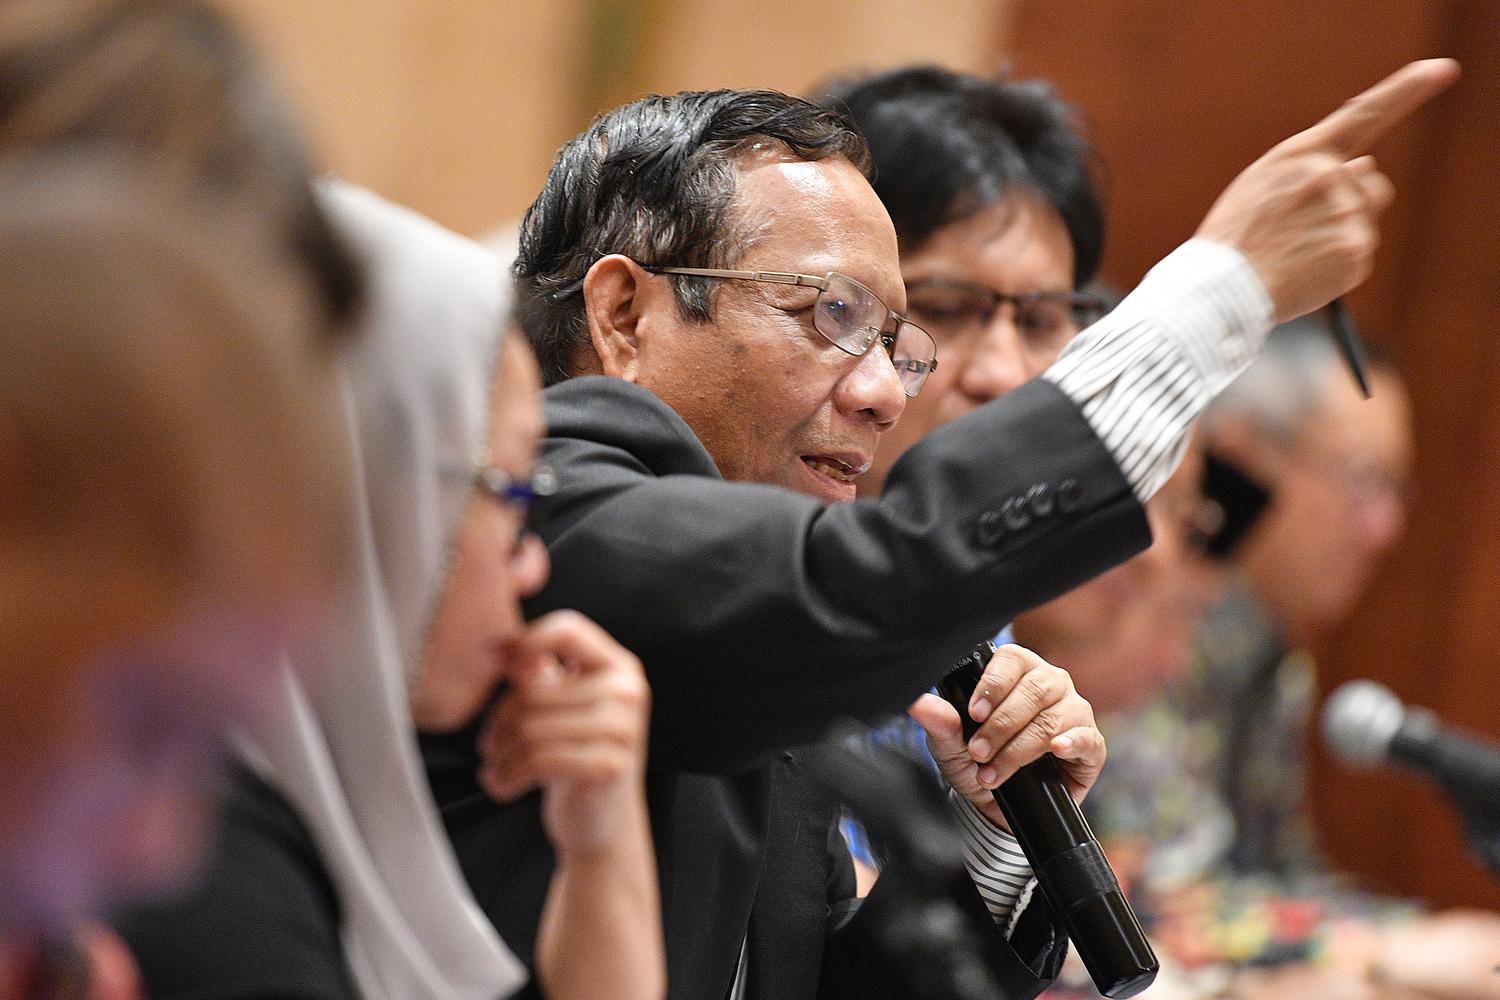 Menteri Koordinator Bidang Politik, Hukum, dan Keamanan (Polhukam) Mahfud MD mempersilahkan Reuni Akbar 212 digelar di Jakarta pada pekan depan. Namun, dia meminta massa menaati aturan yang berlaku.